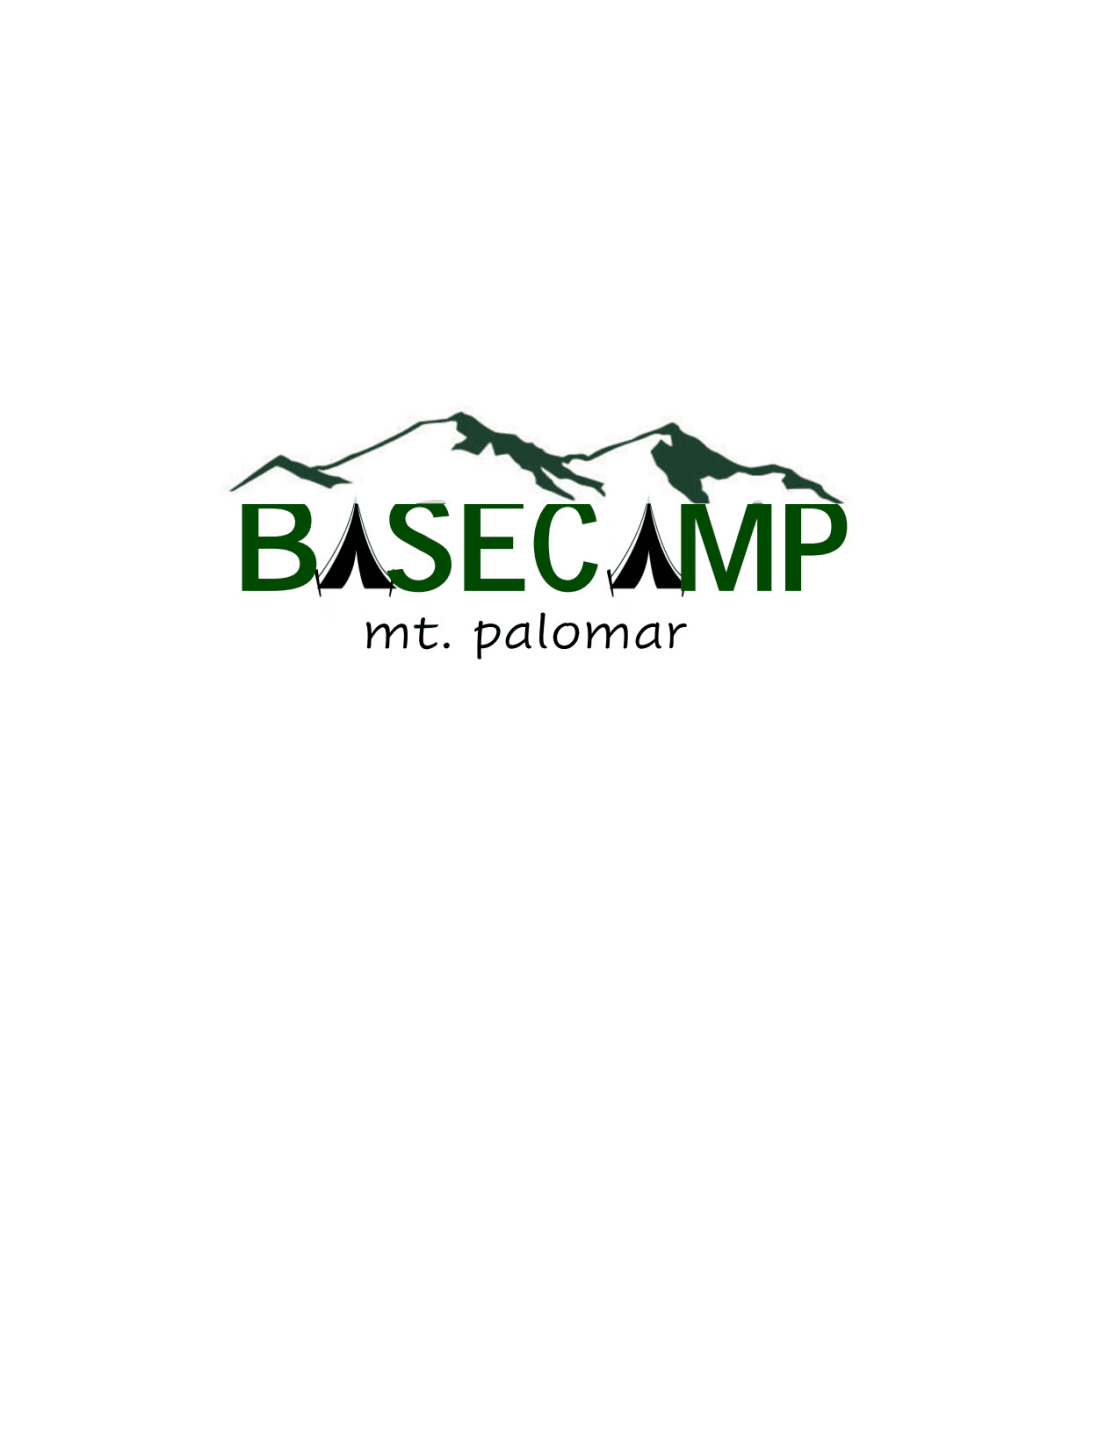 Basecamp Palomar